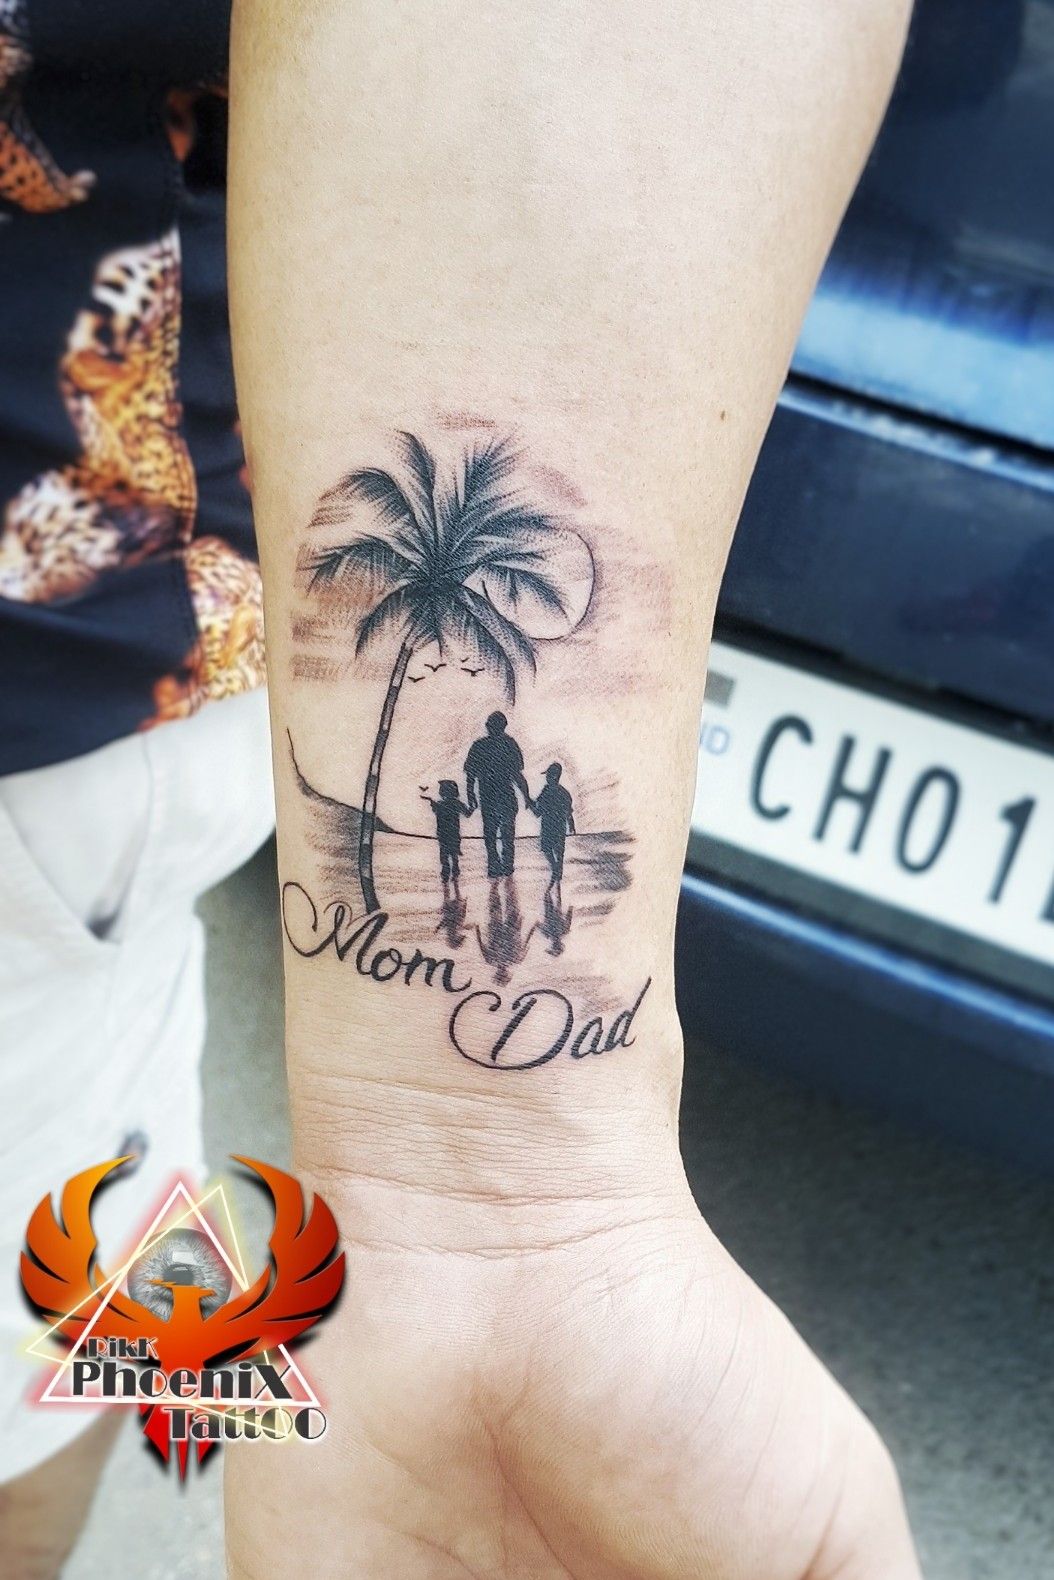 Vishnu ink tattoo on Instagram My New Mom Dad with Son Tattoo Work I  Hope You Like It Vishnu Ink Tattoo Warasiya Vadodara Gujarat India  M9998944741 